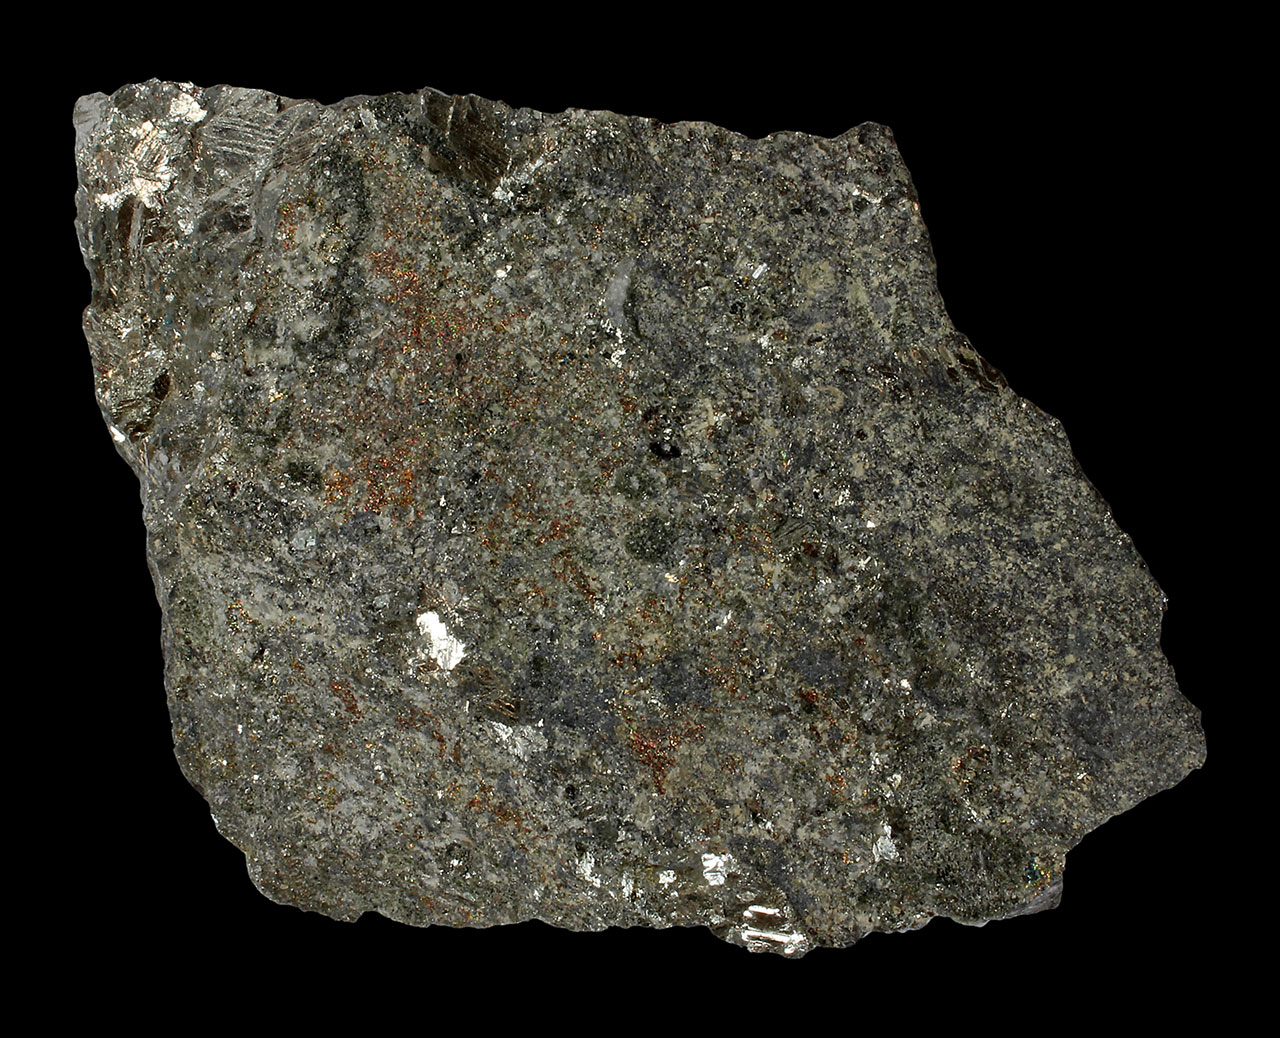 Shiny grains of native antimony with irridescent pyrite from Routakallio Quarry, Seinäjoki, Finland